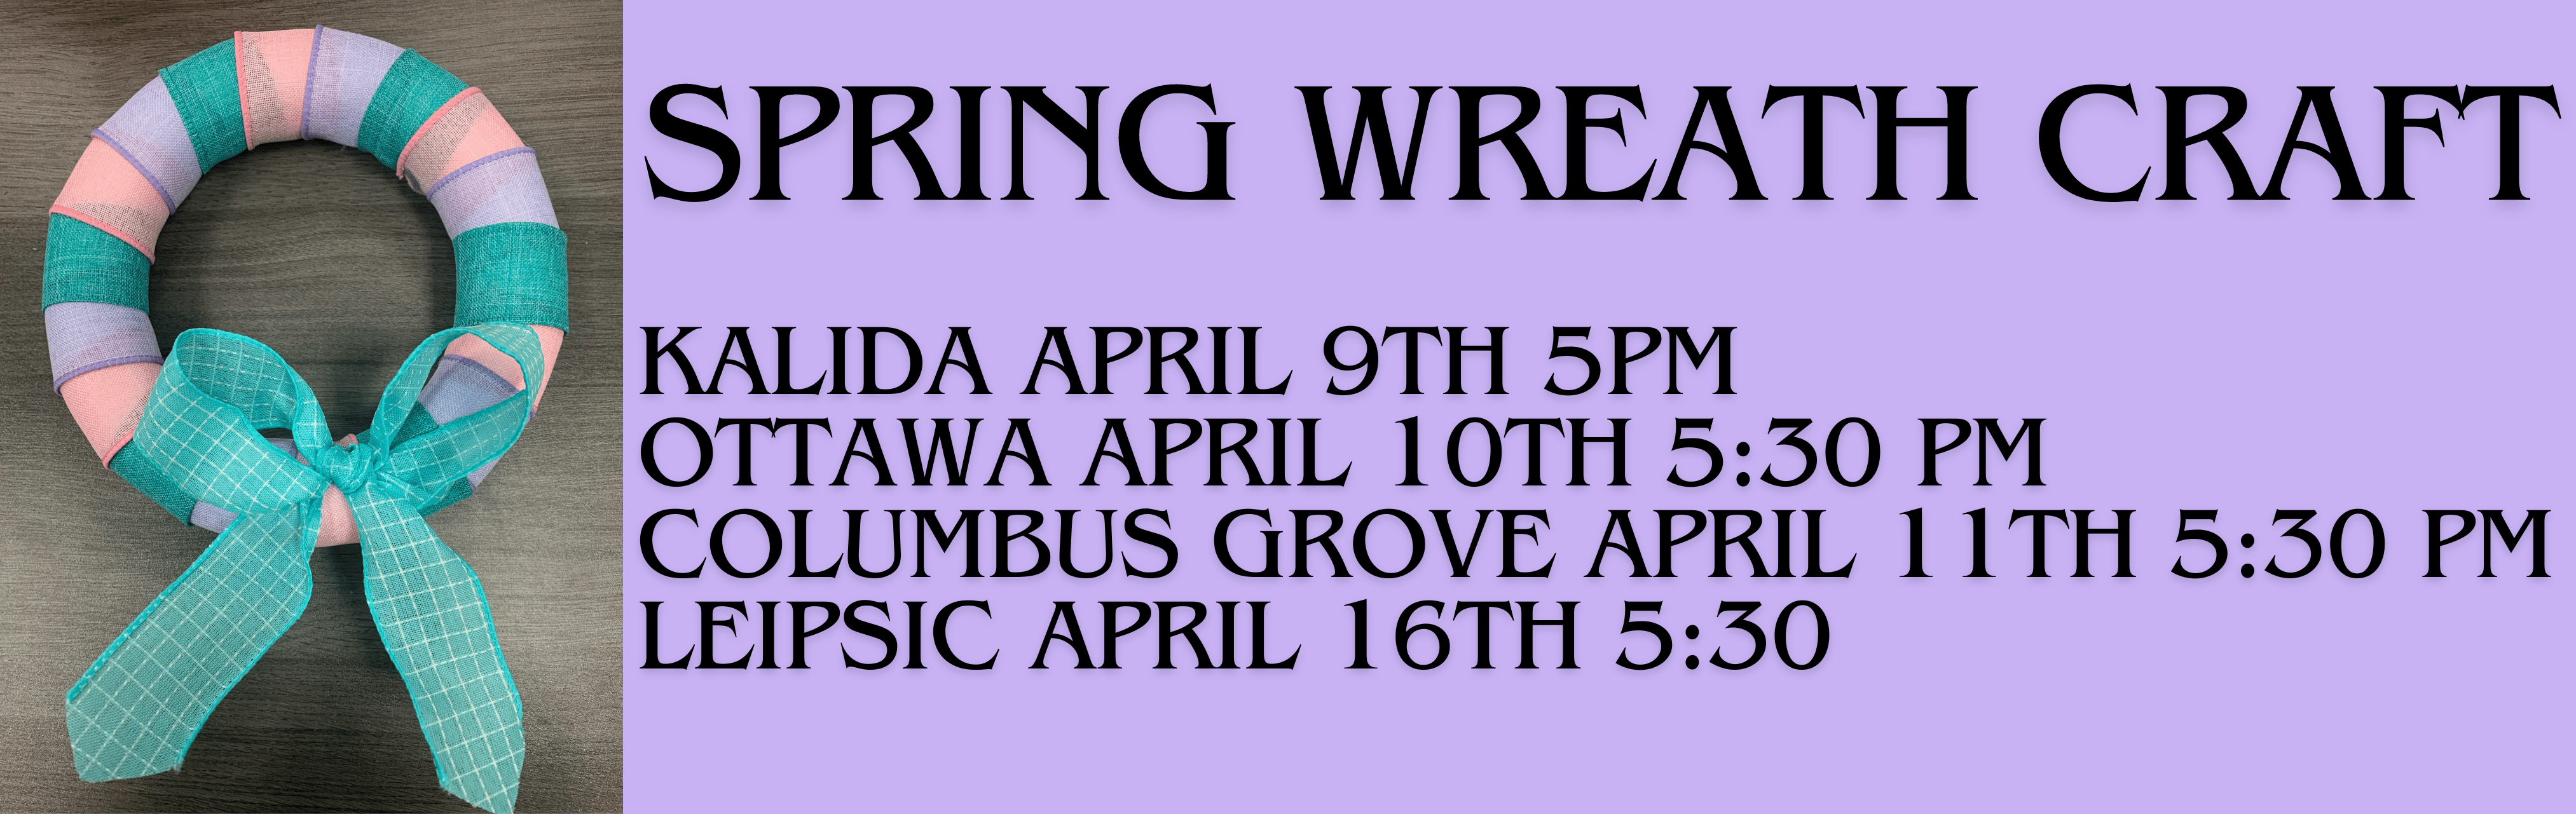 Pink green purple Spring Wreath Craft Kalida April 9th 5 pm Ottawa April 10 5:30 pm Columbus Grove April 11th 5:30 pm Leipsic April 16th 5:30 pm